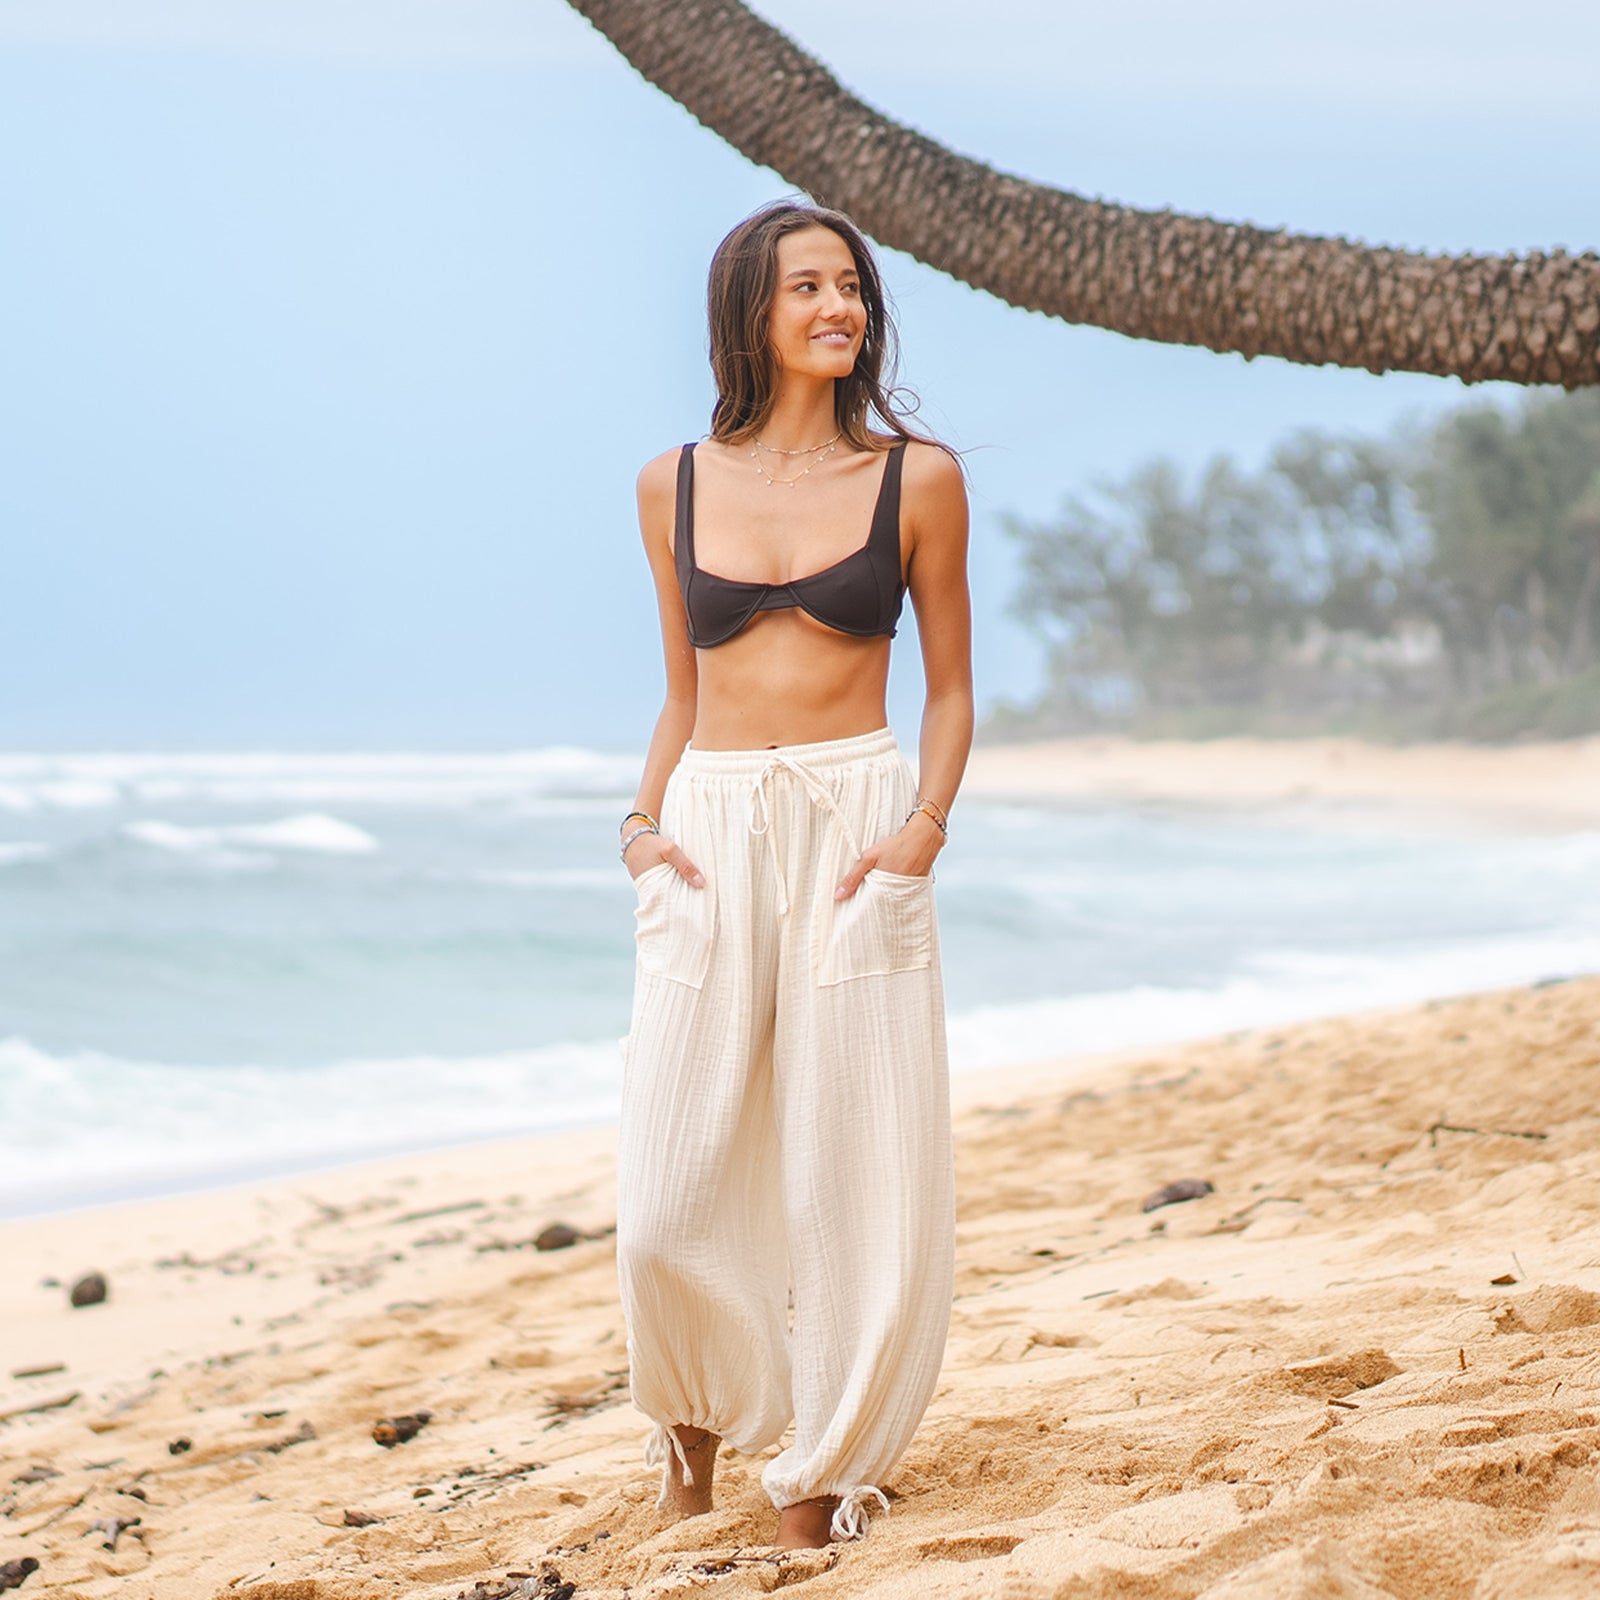 Lotus and Luna Harem Pants Thai Pants for Women Perfect for Beach & Lounge,  Madagascar Harem Pants S/M - Walmart.com